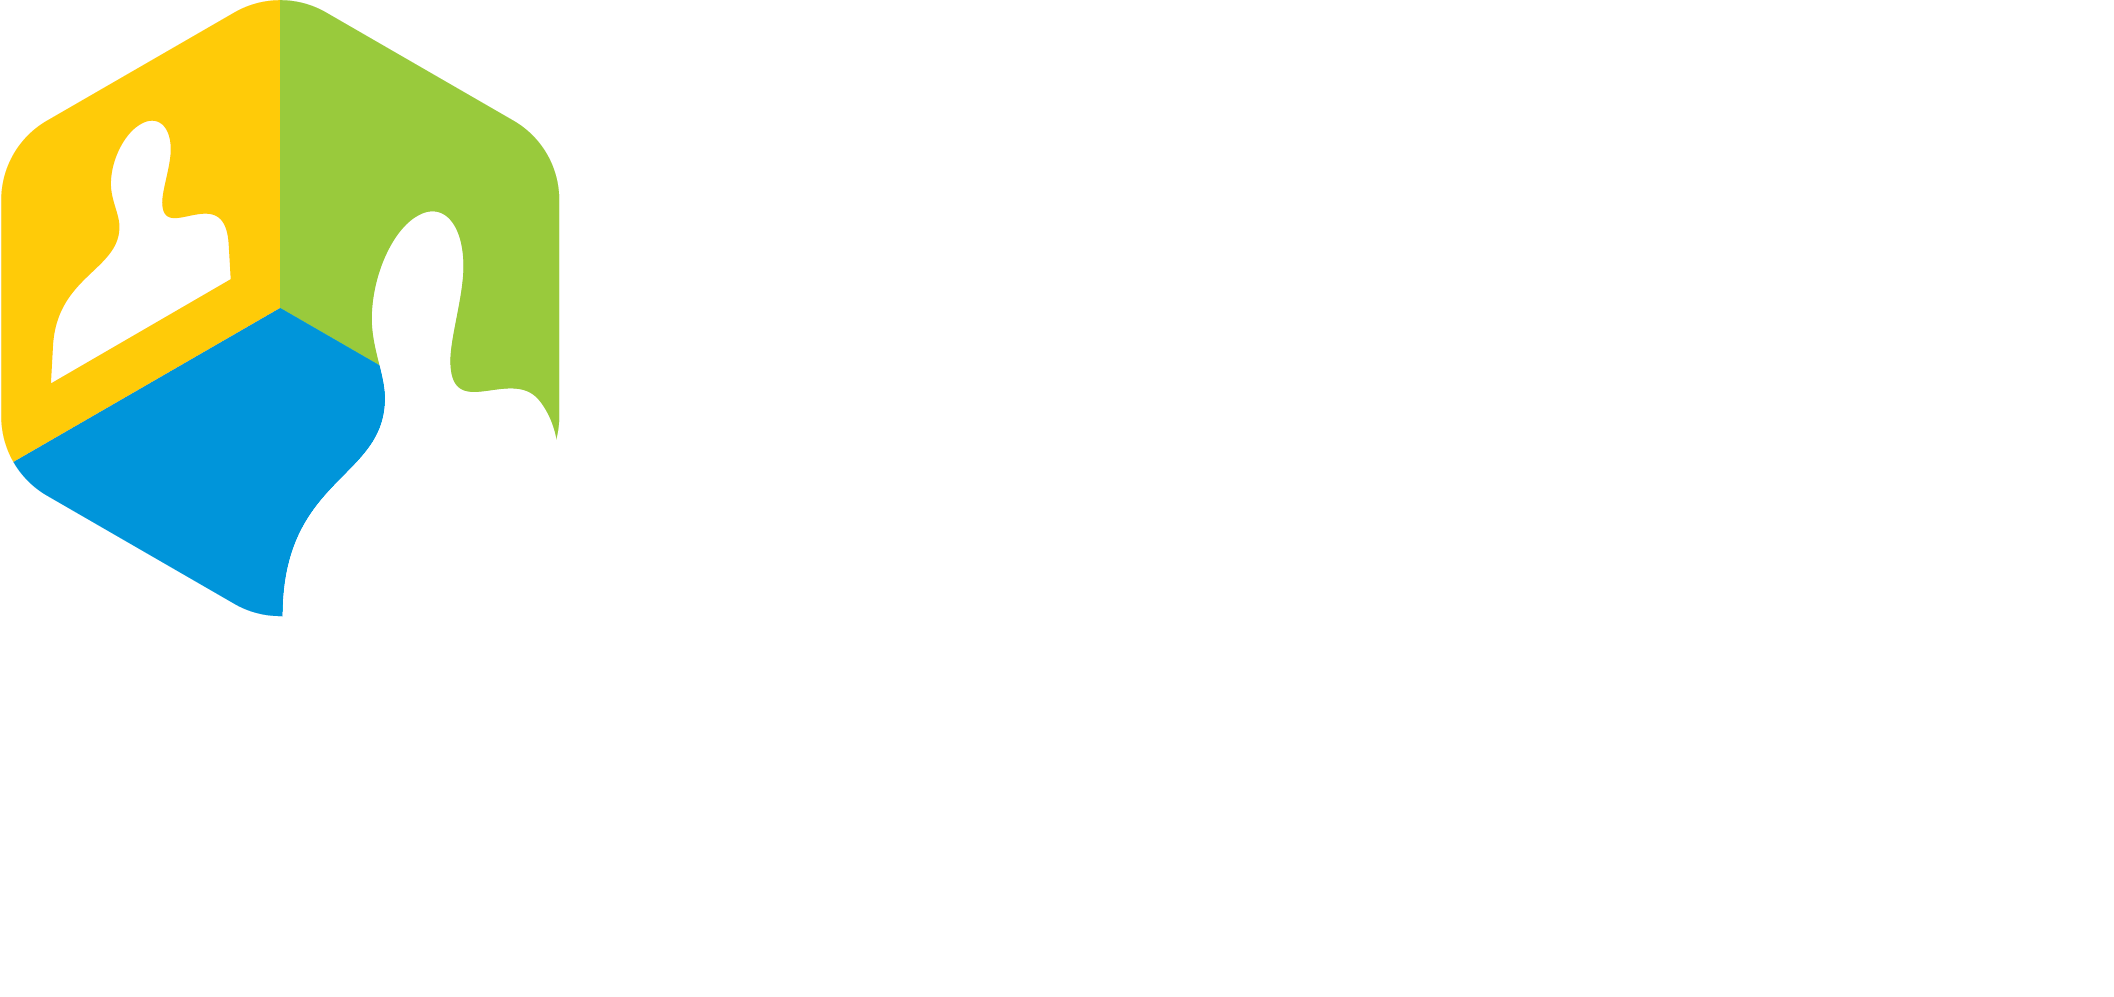 Vidyo, an Enghouse Corporate Logo